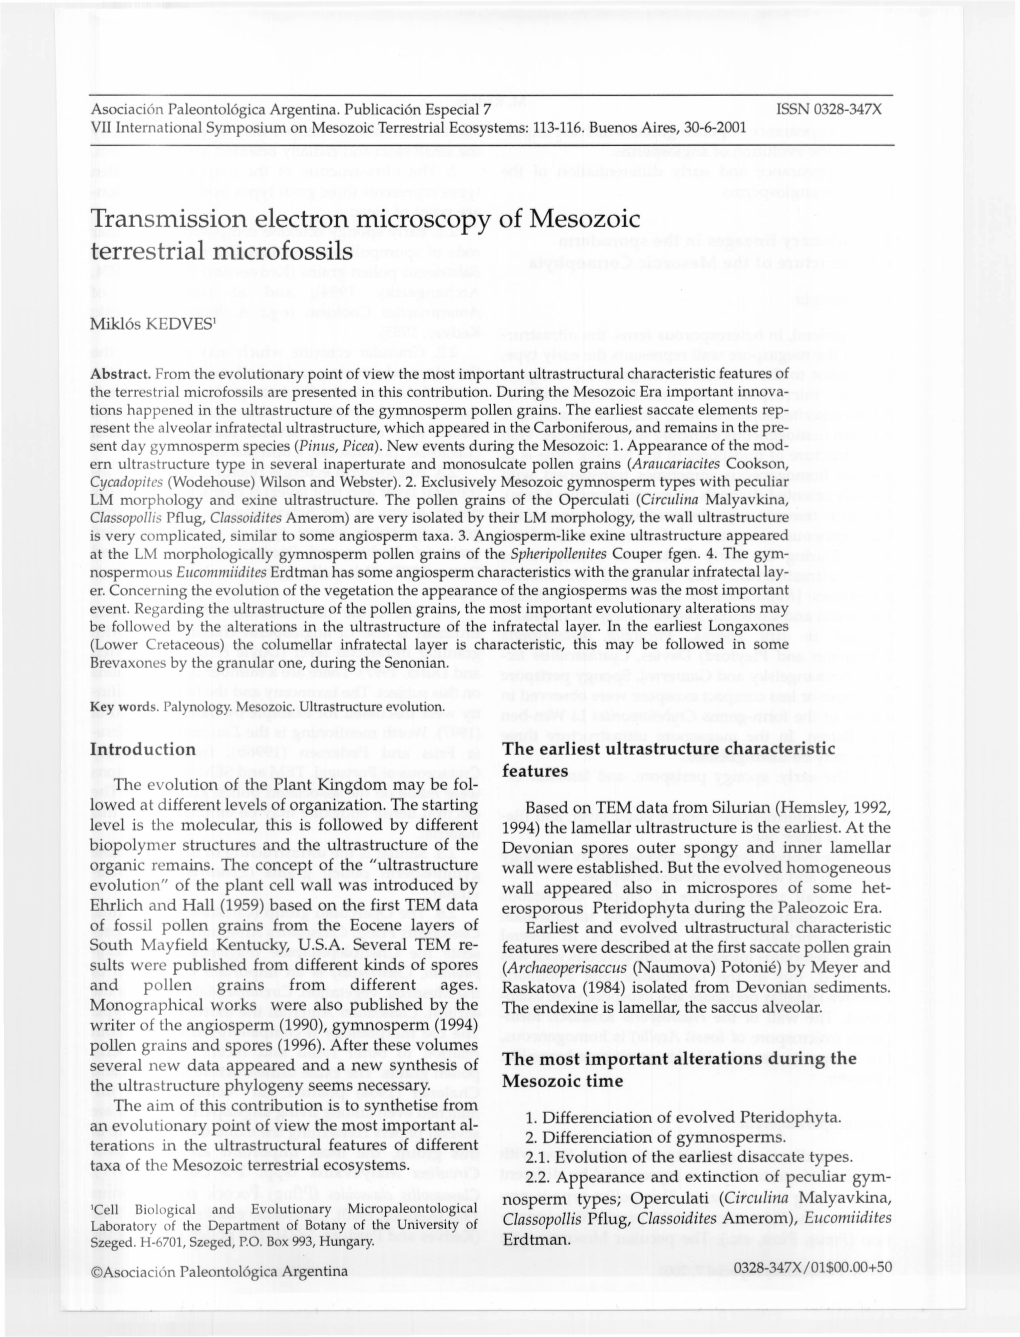 Transmission Electron Microscopy of Mesozoic Terrestrial Microfossils